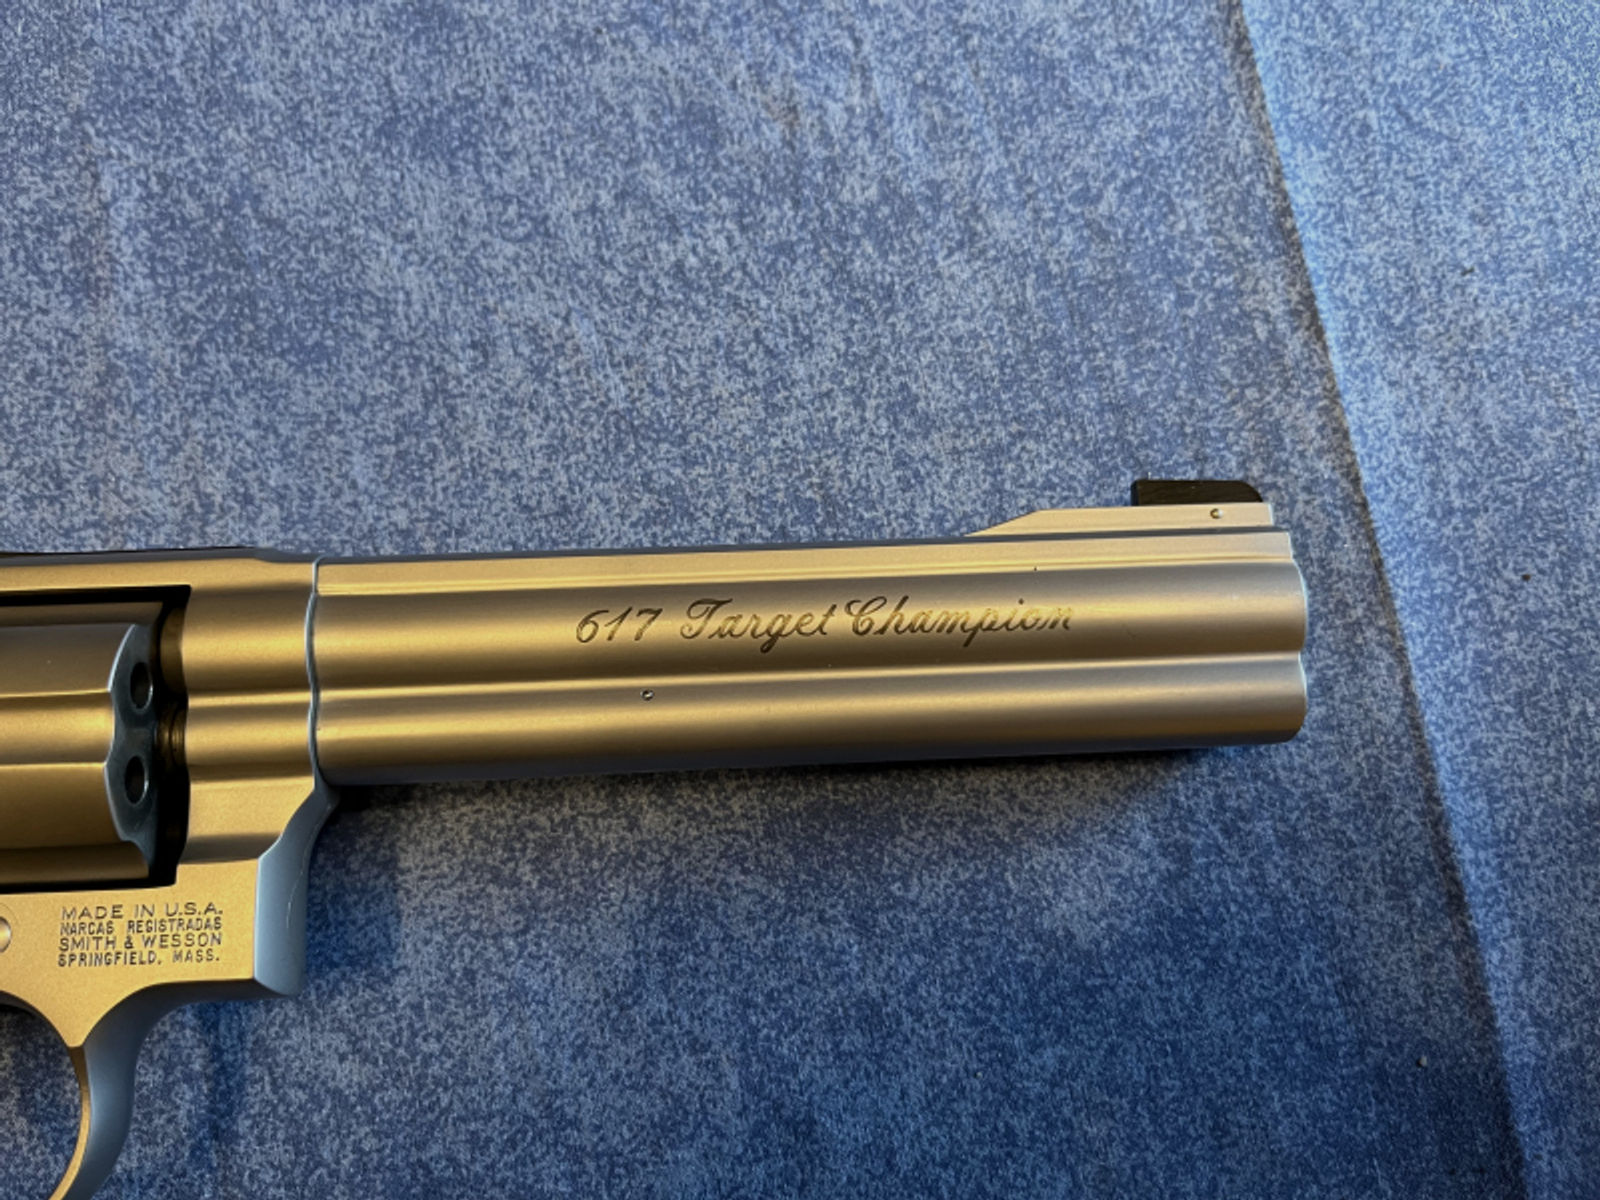 Smith & Wesson Model 617 Kaliber .22 lr Target Champion Sportrevolver